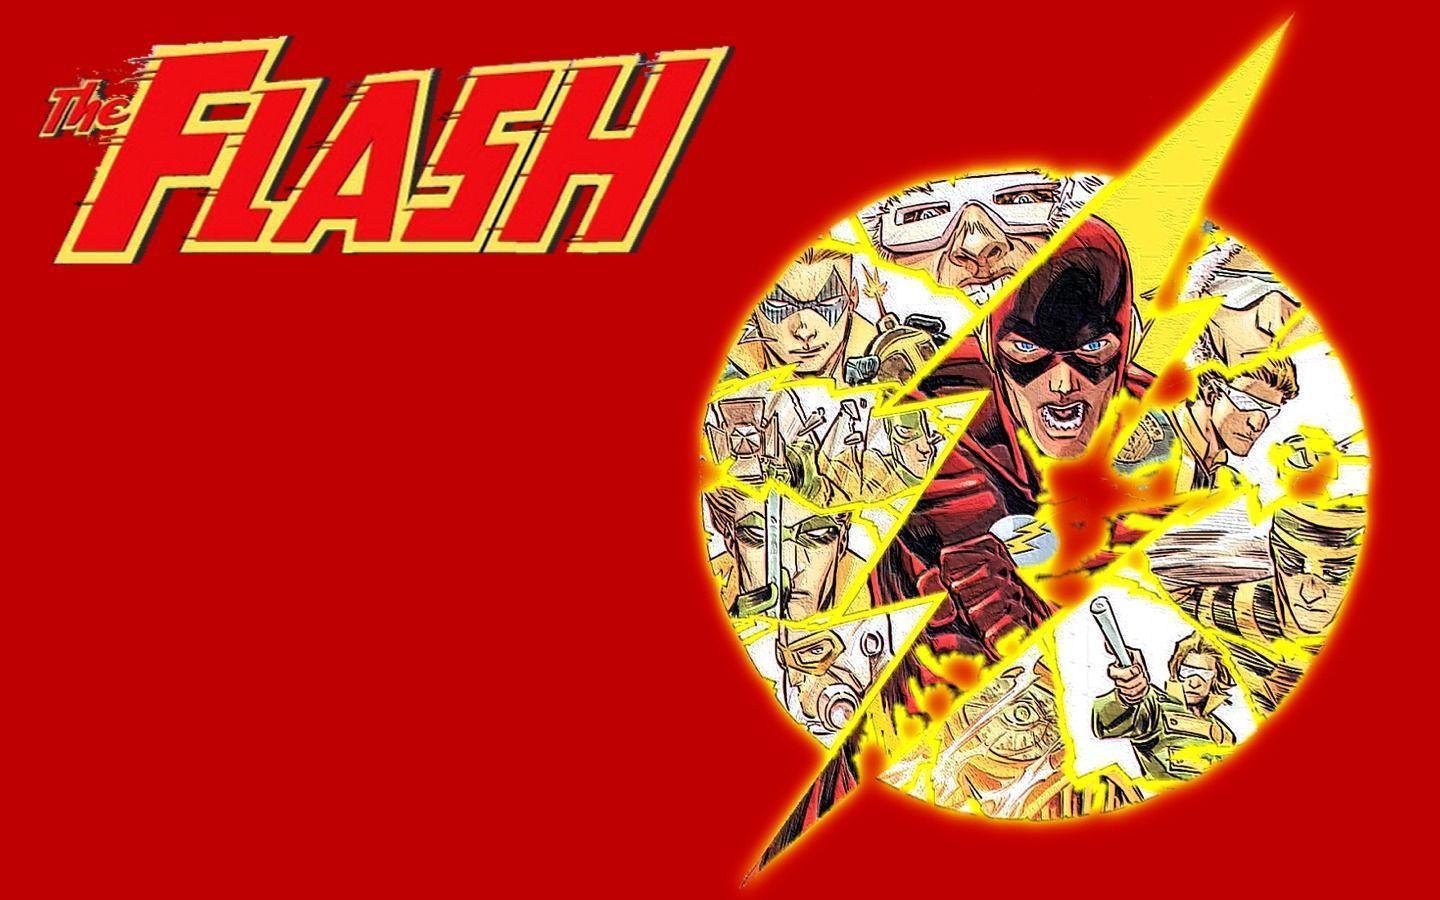 Flash Superhero Wallpaper